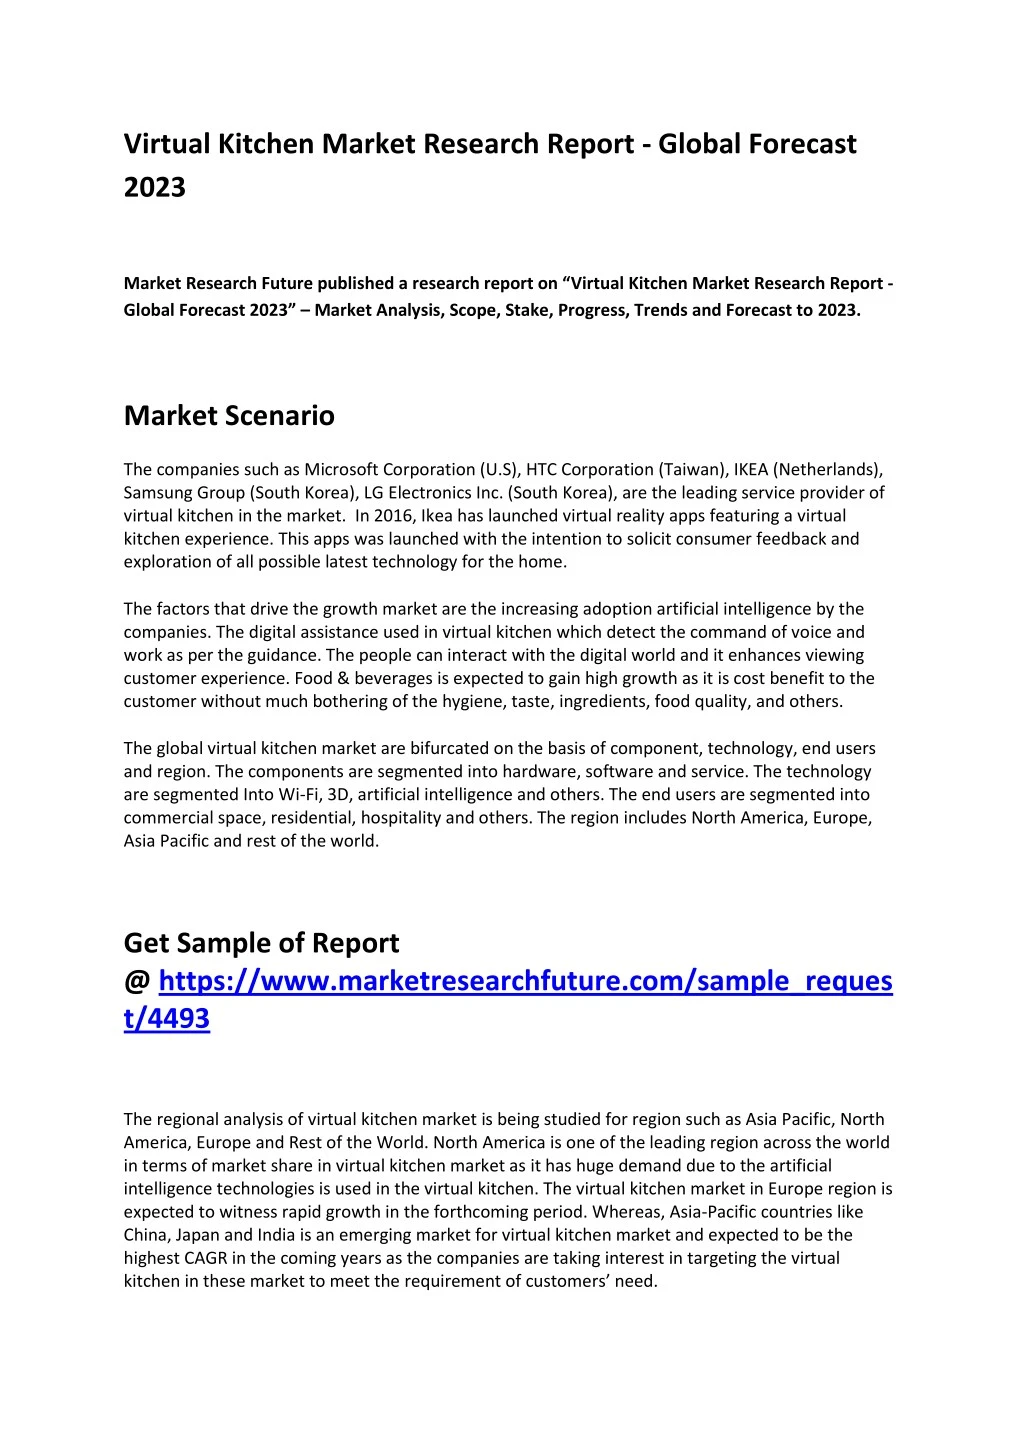 virtual kitchen market research report global